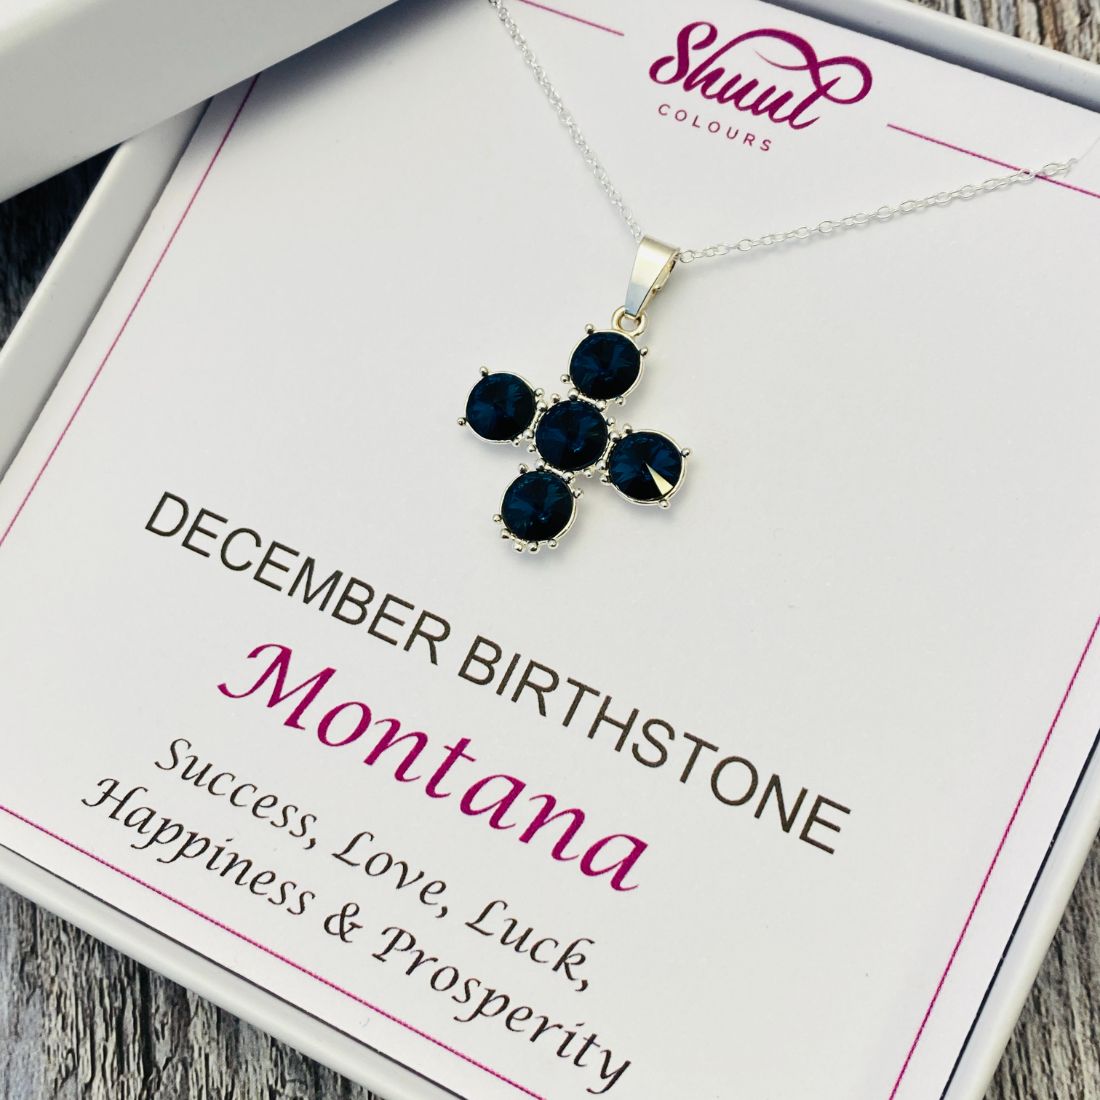 December Birthstone Necklace - Cross Pendant